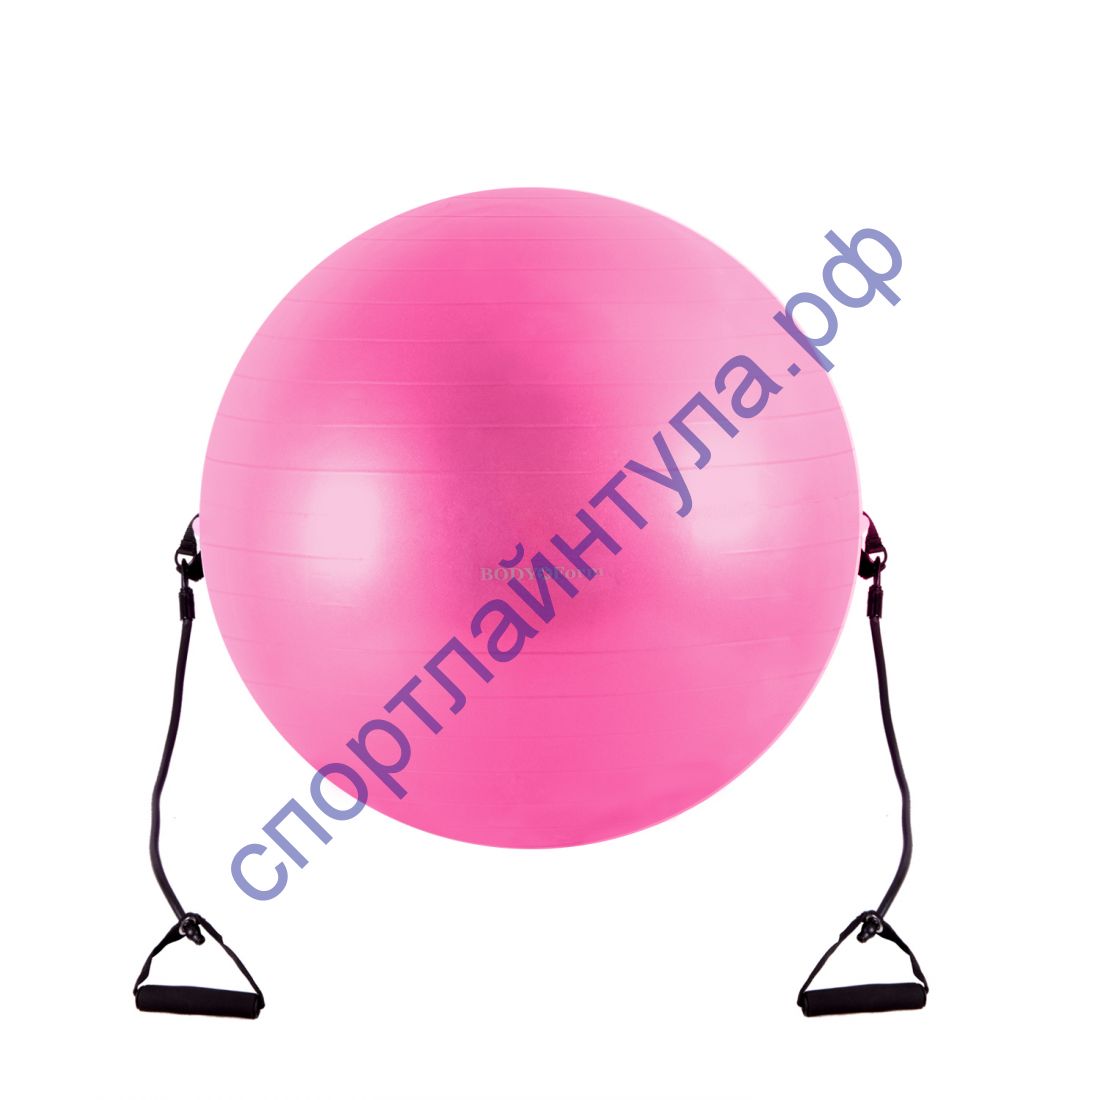 Мяч гимнастический с эспандером BF - GBE01AB (65см)